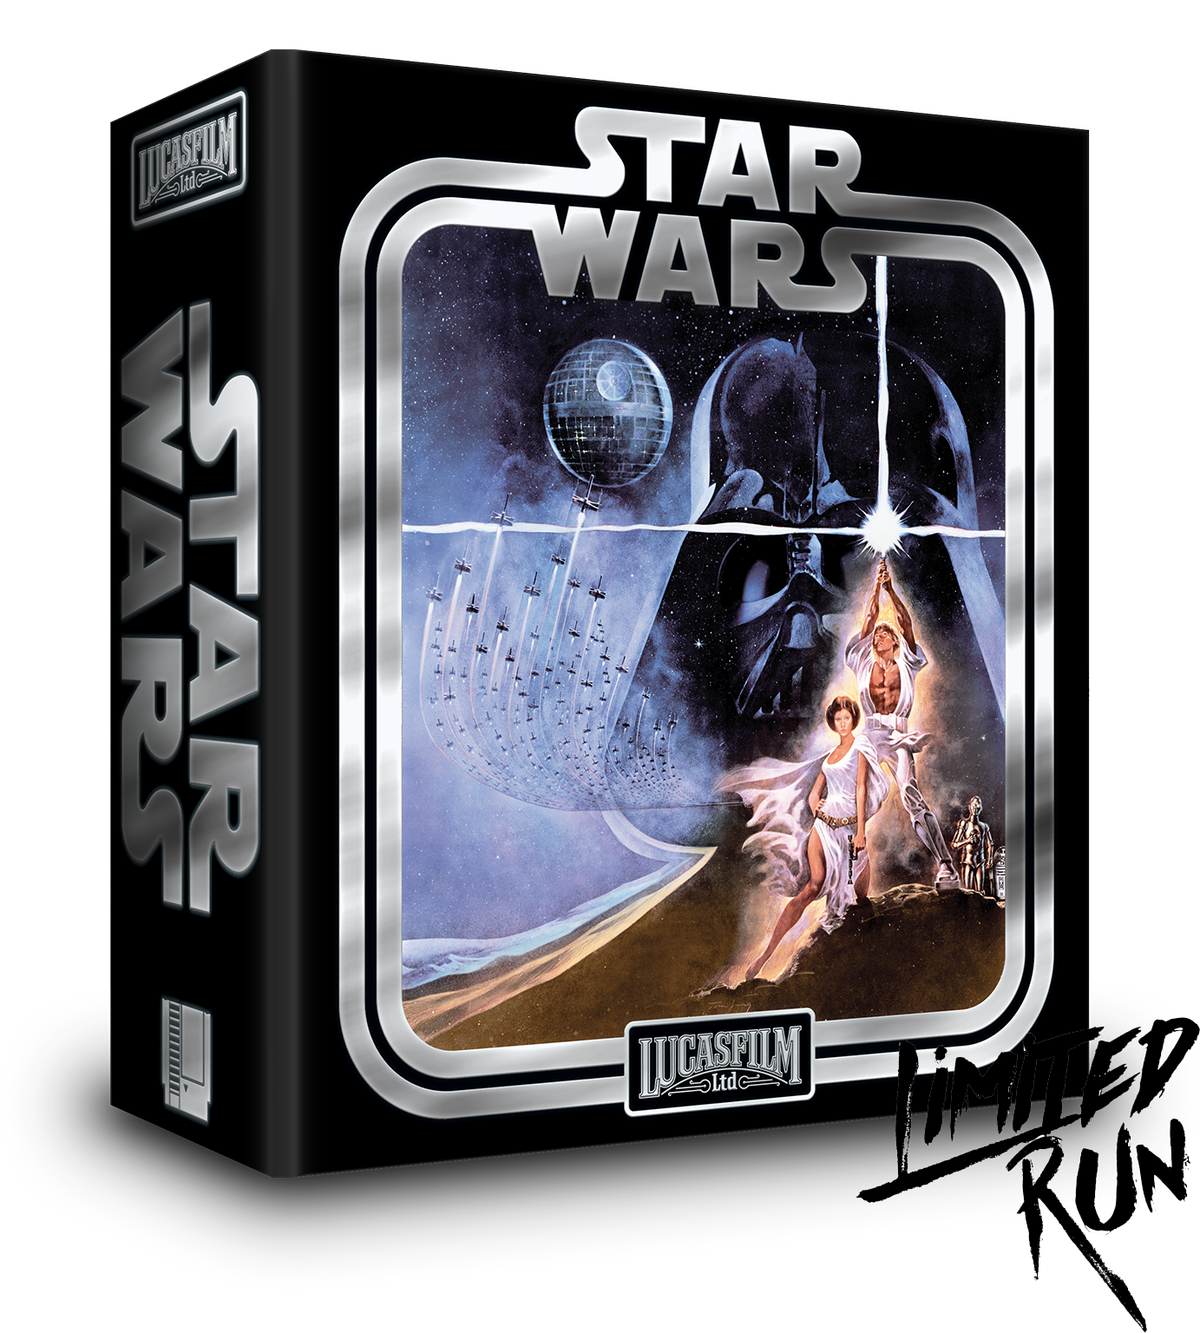 Star Wars (NES) Premium Edition